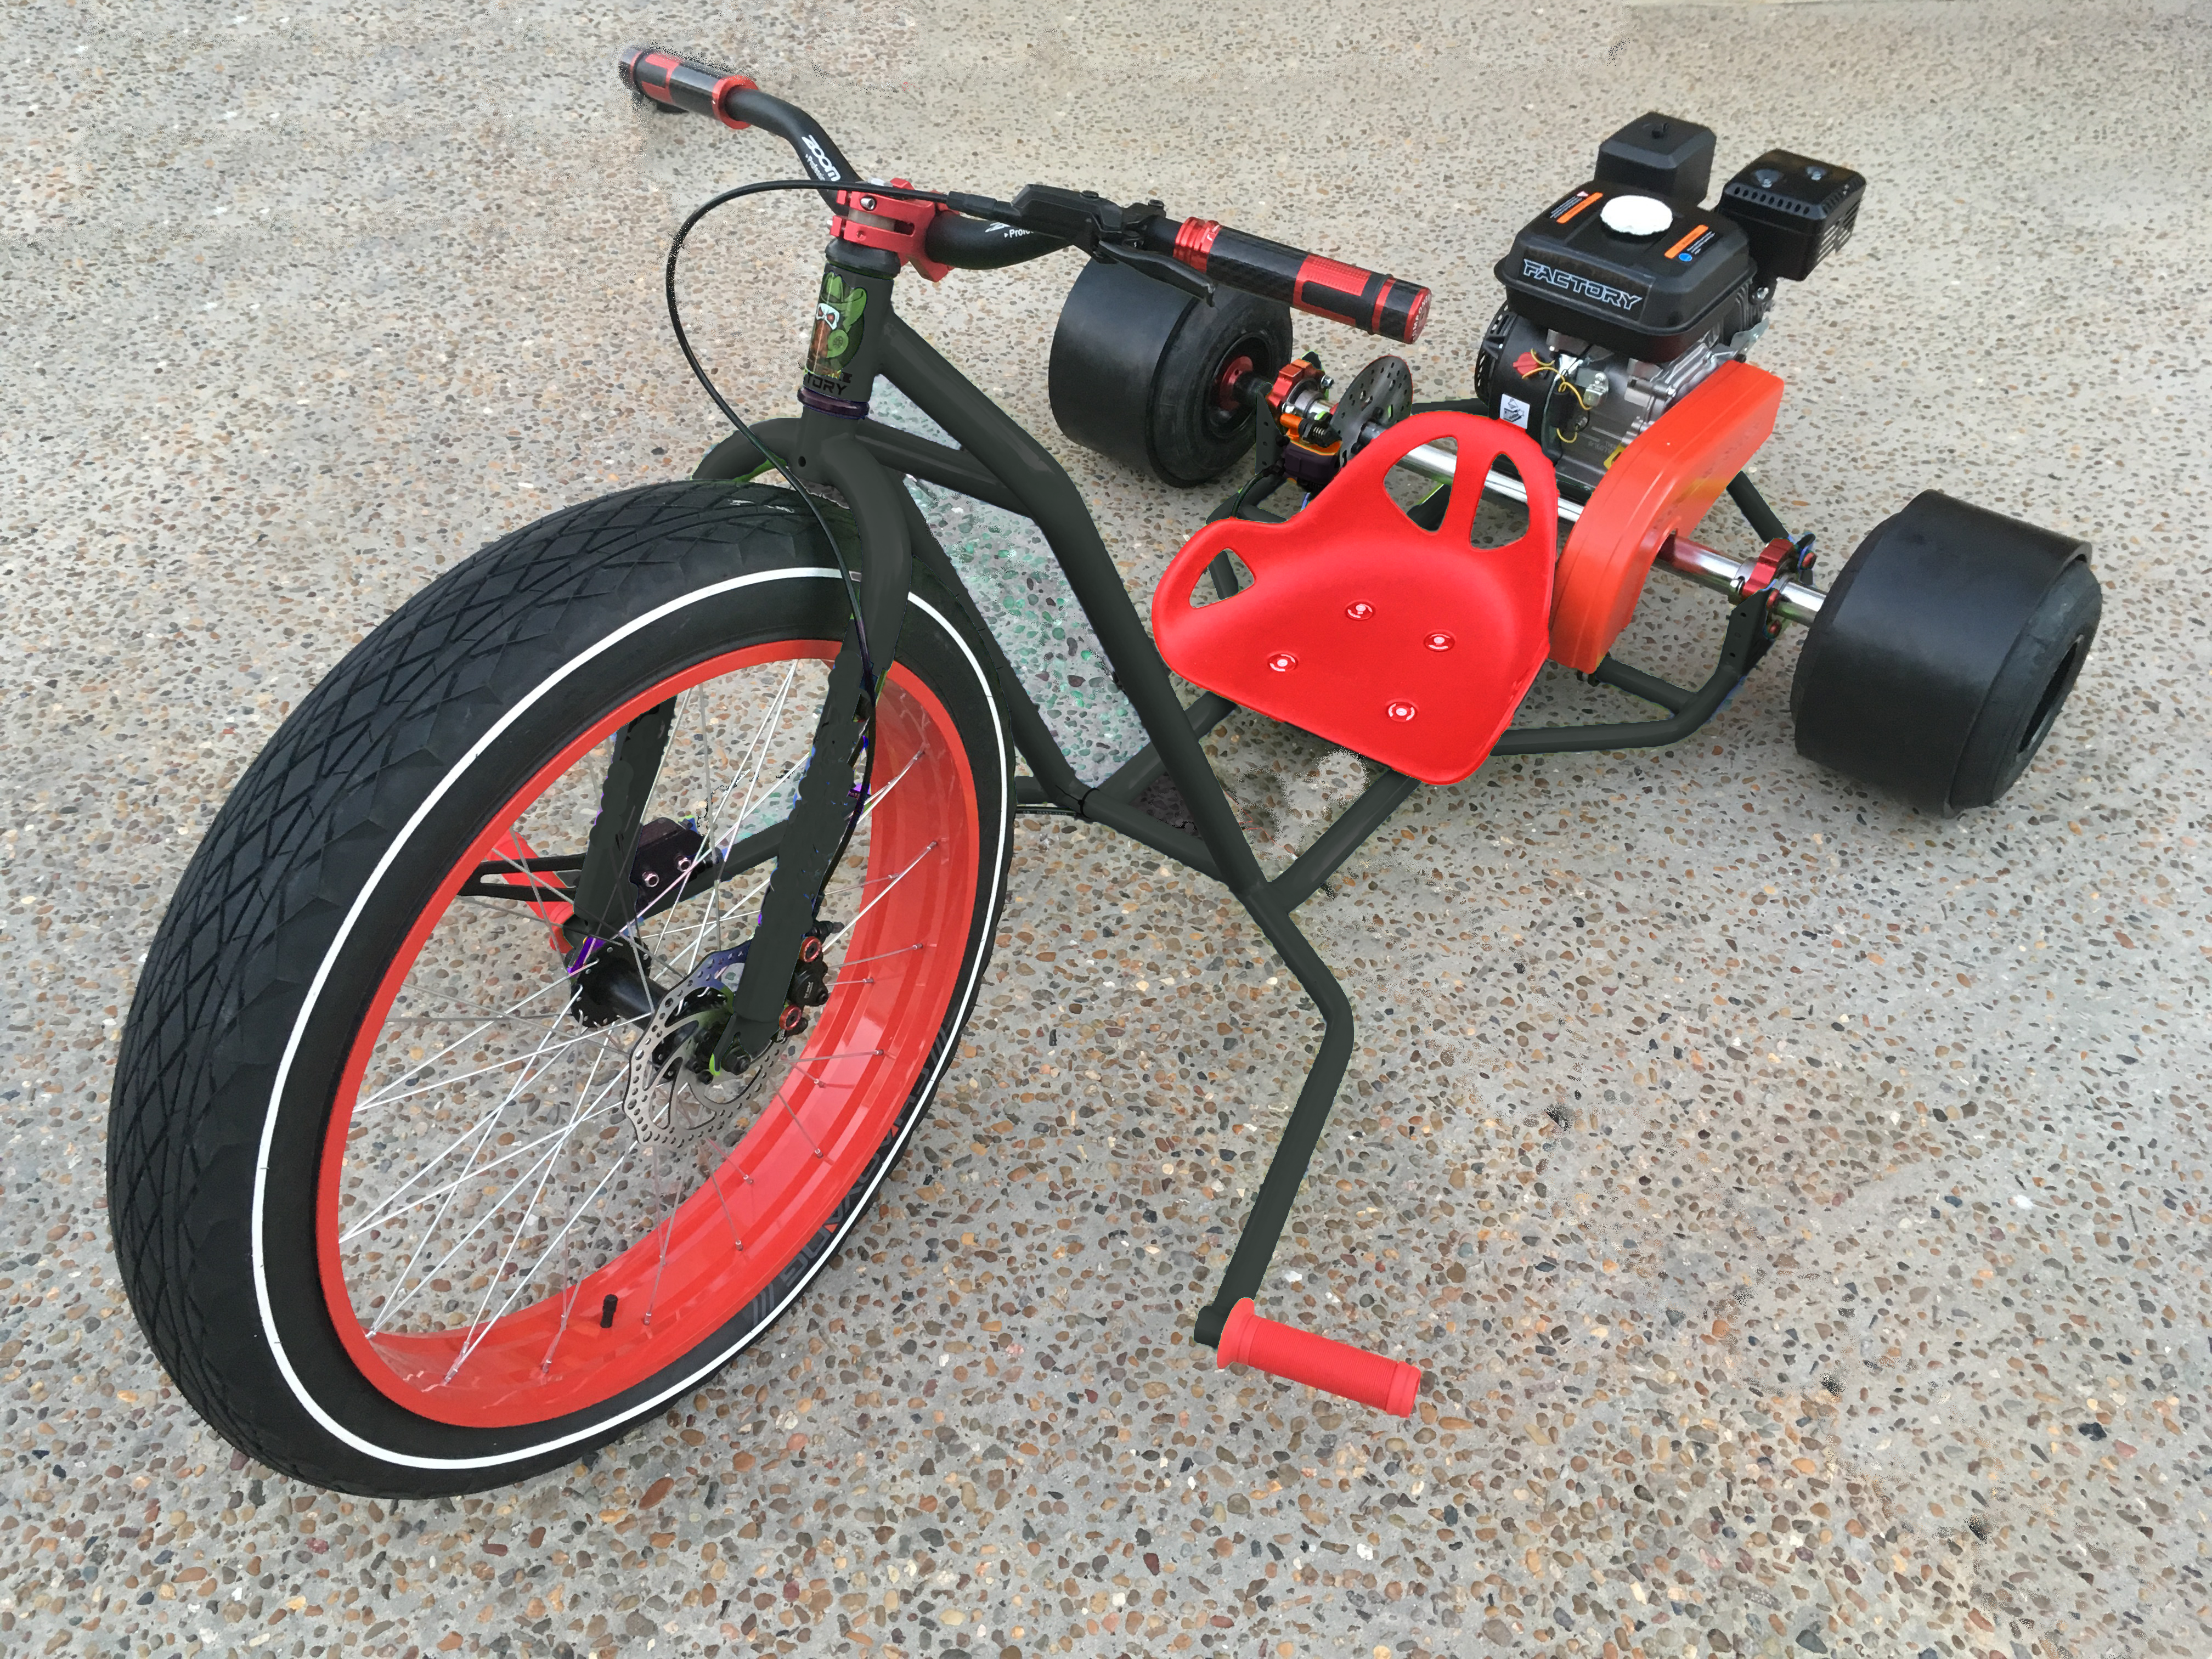 motorized drift bike